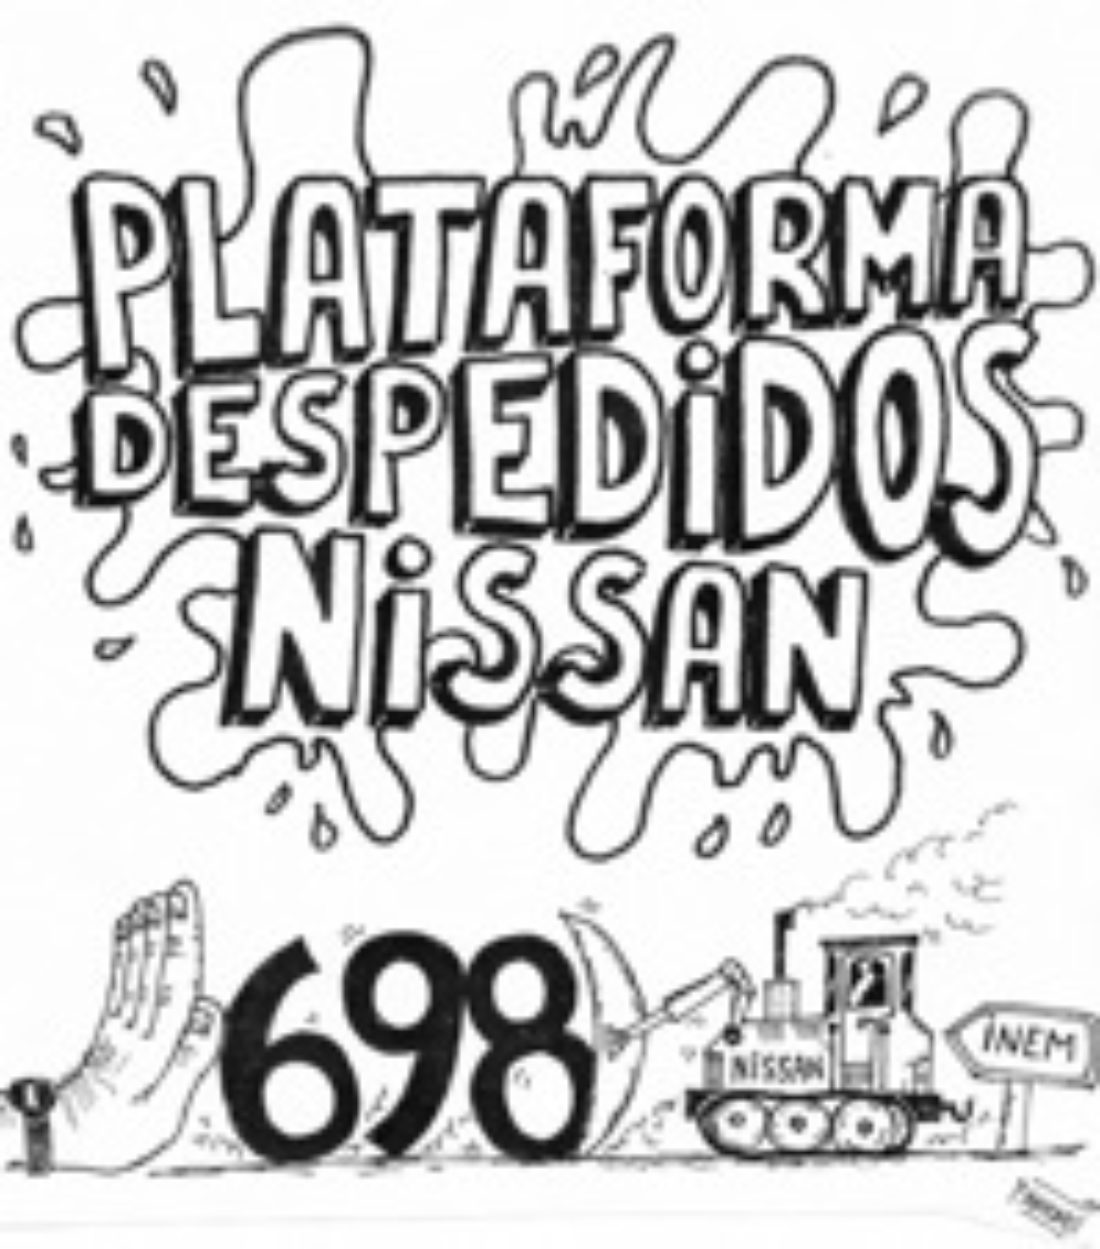 15 octubre, Barcelona : Solidaridad despedidxs Nissan